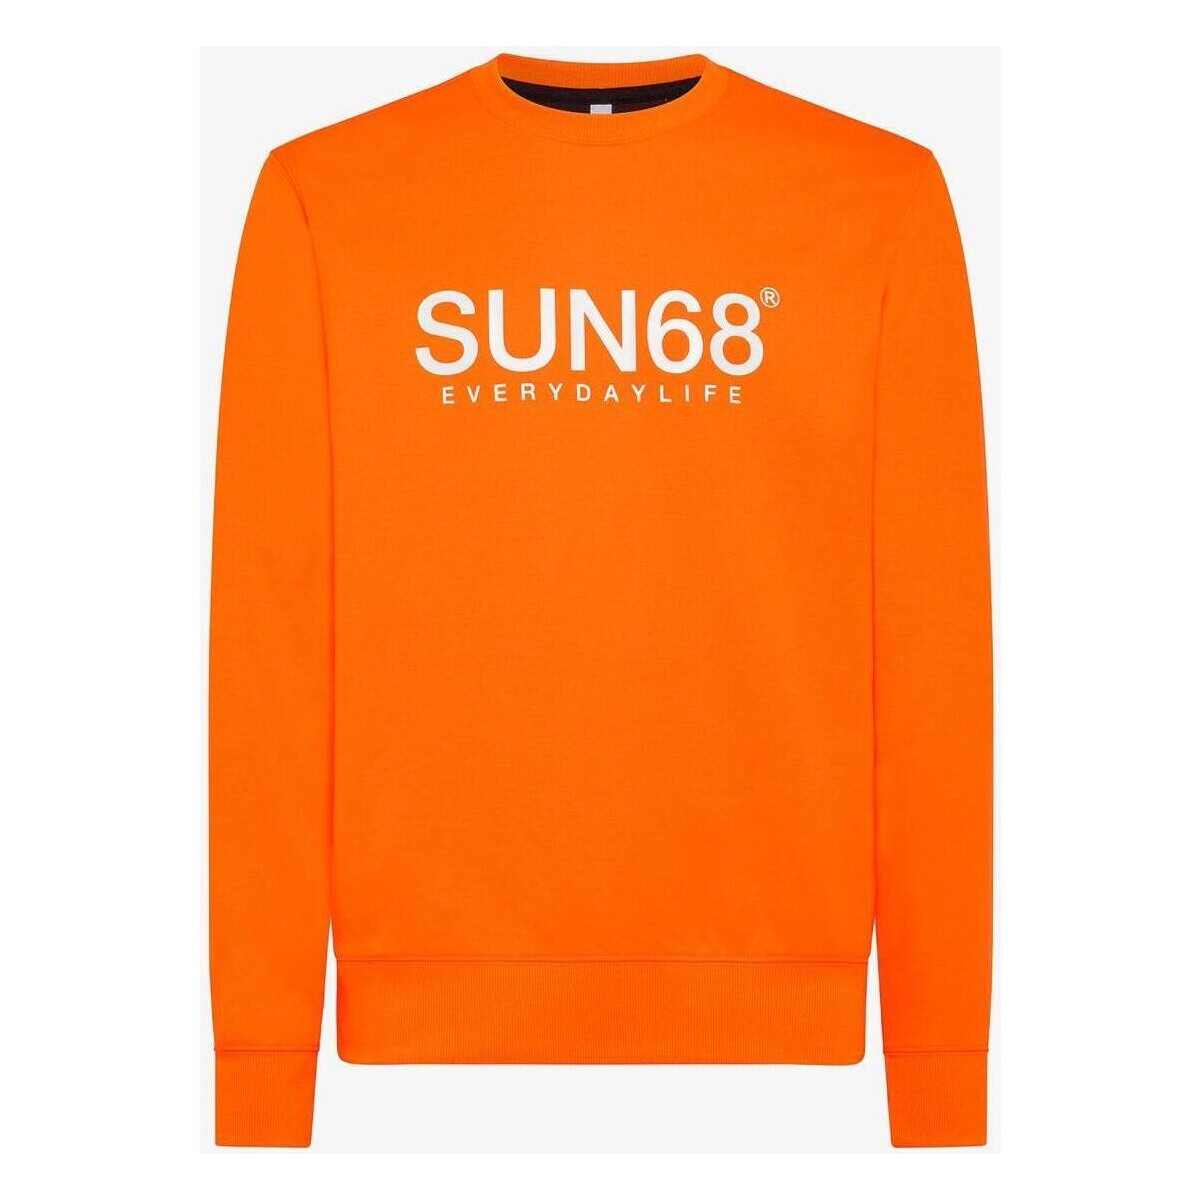 Textiel Heren Truien Sun68  Oranje